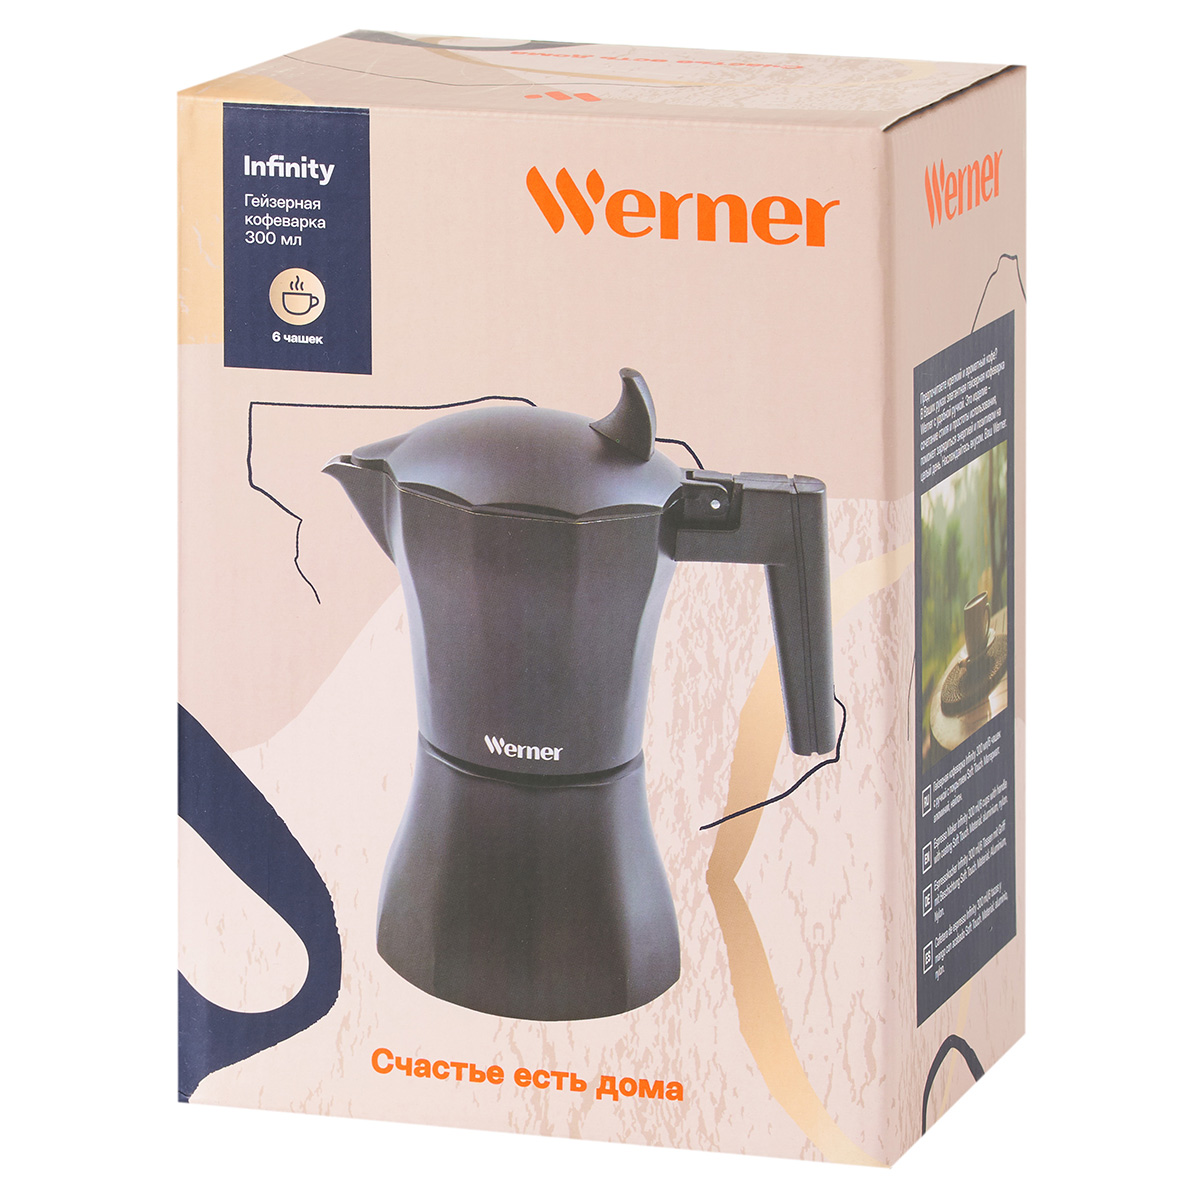 Гейзерная кофеварка Werner Infinity 51392 0,3 л фото